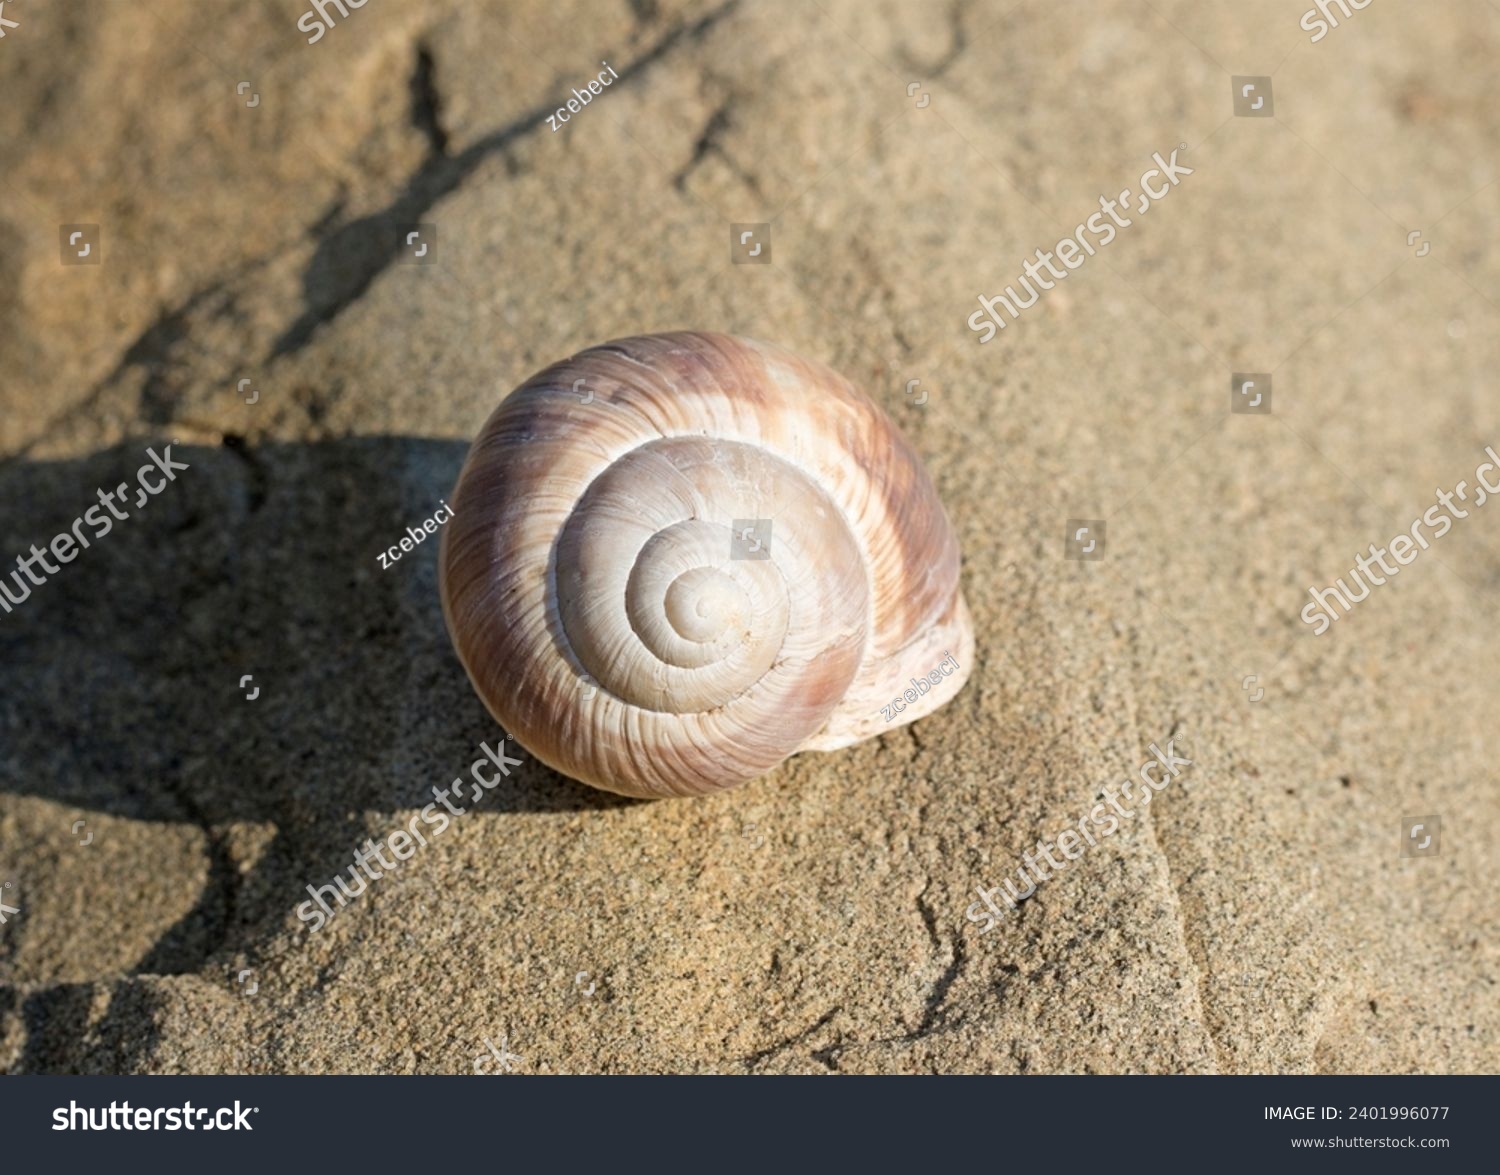 An Adana snail shell on stone in the autumn #2401996077